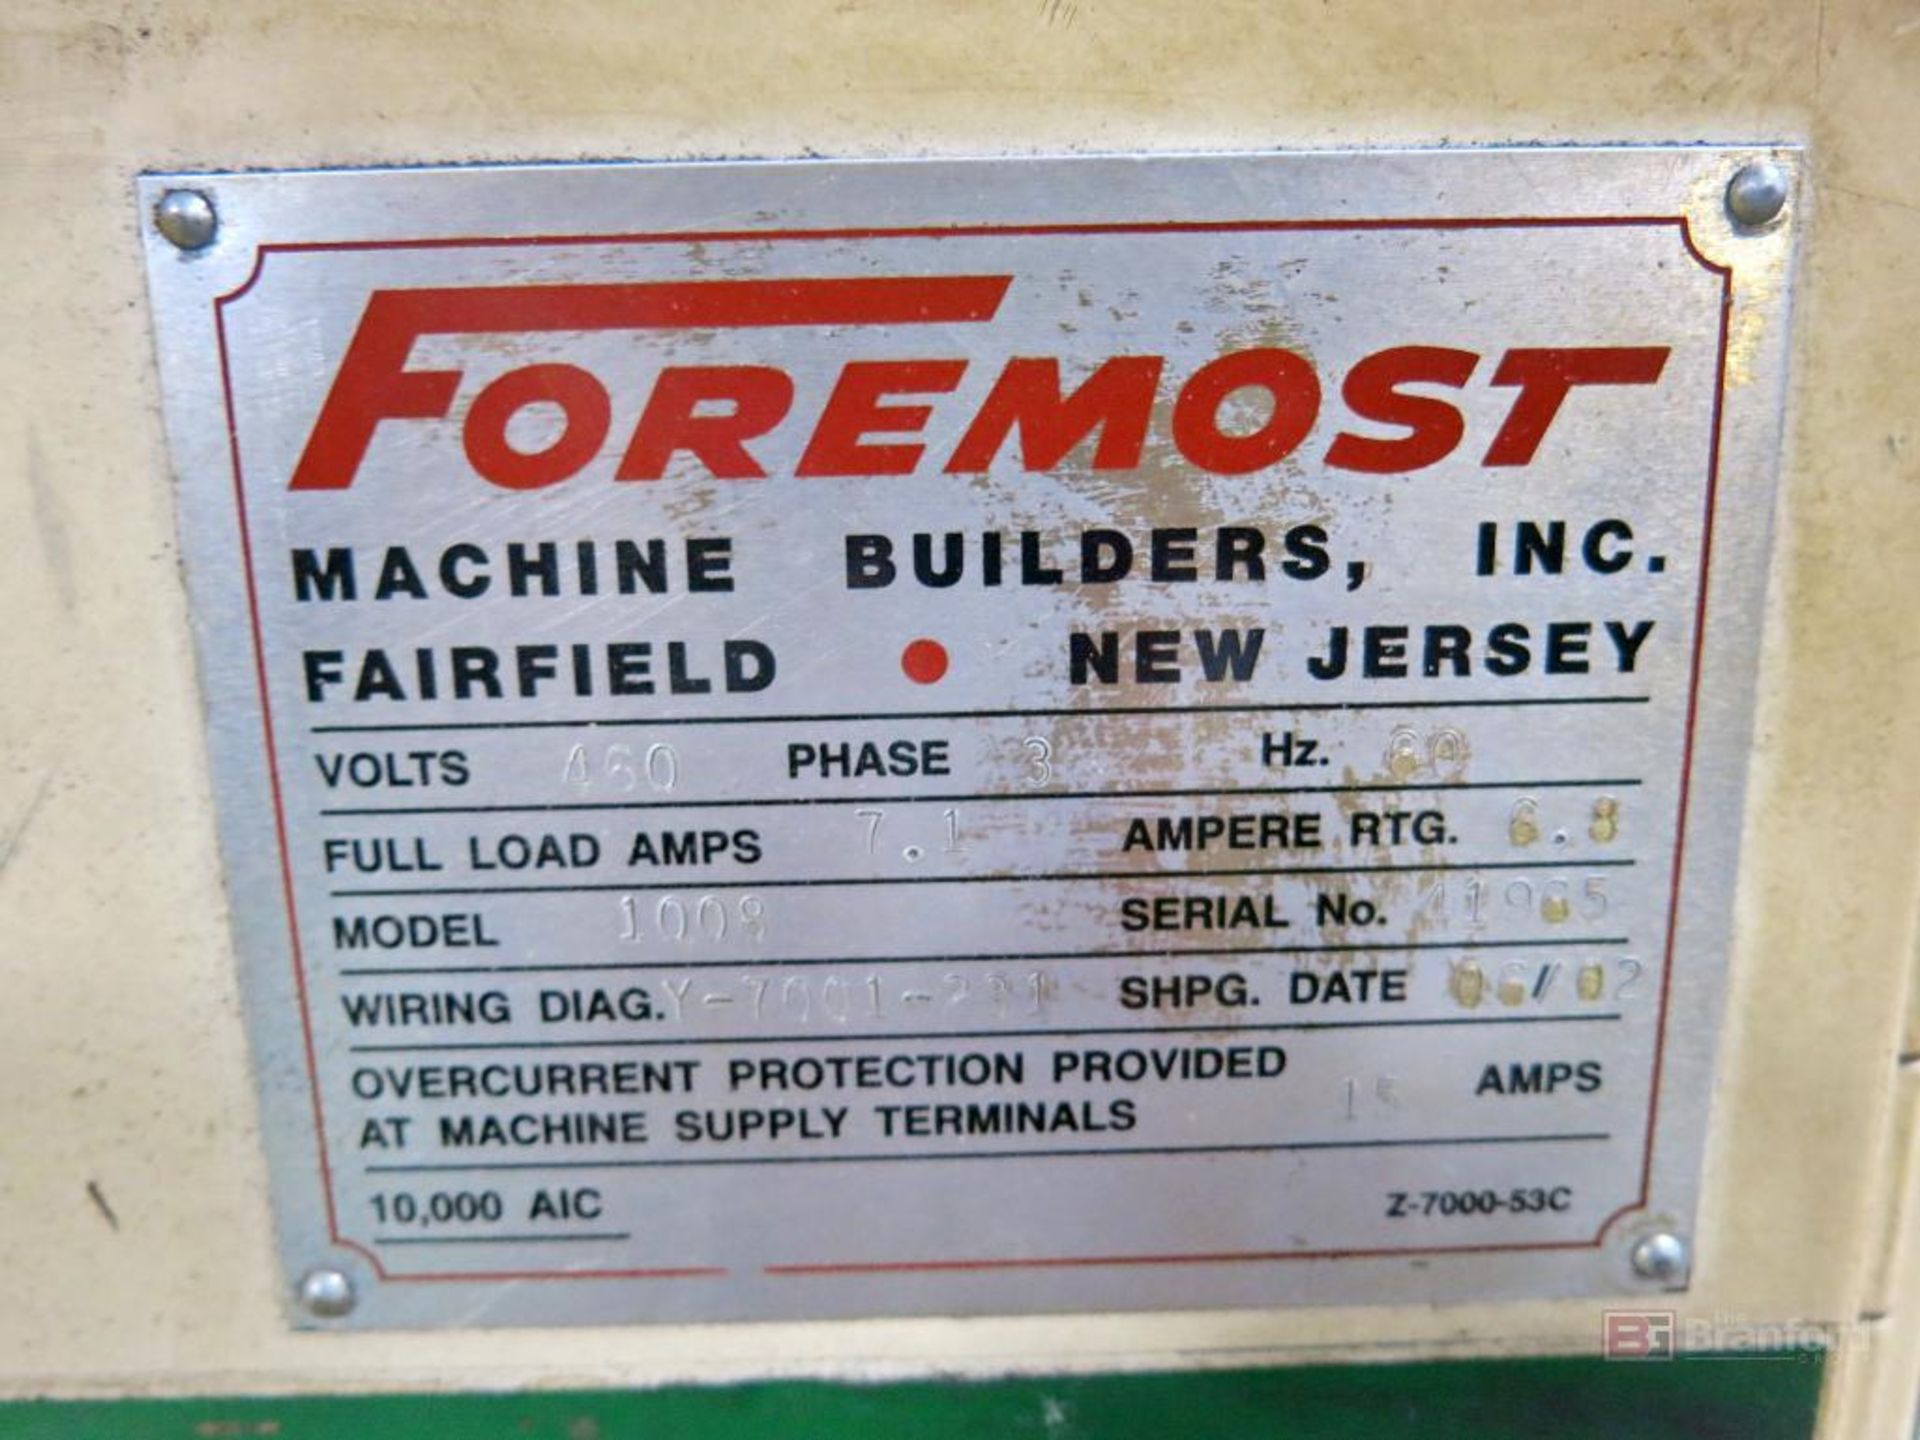 Foremost Model 1008 5-HP Granulator - Image 2 of 3